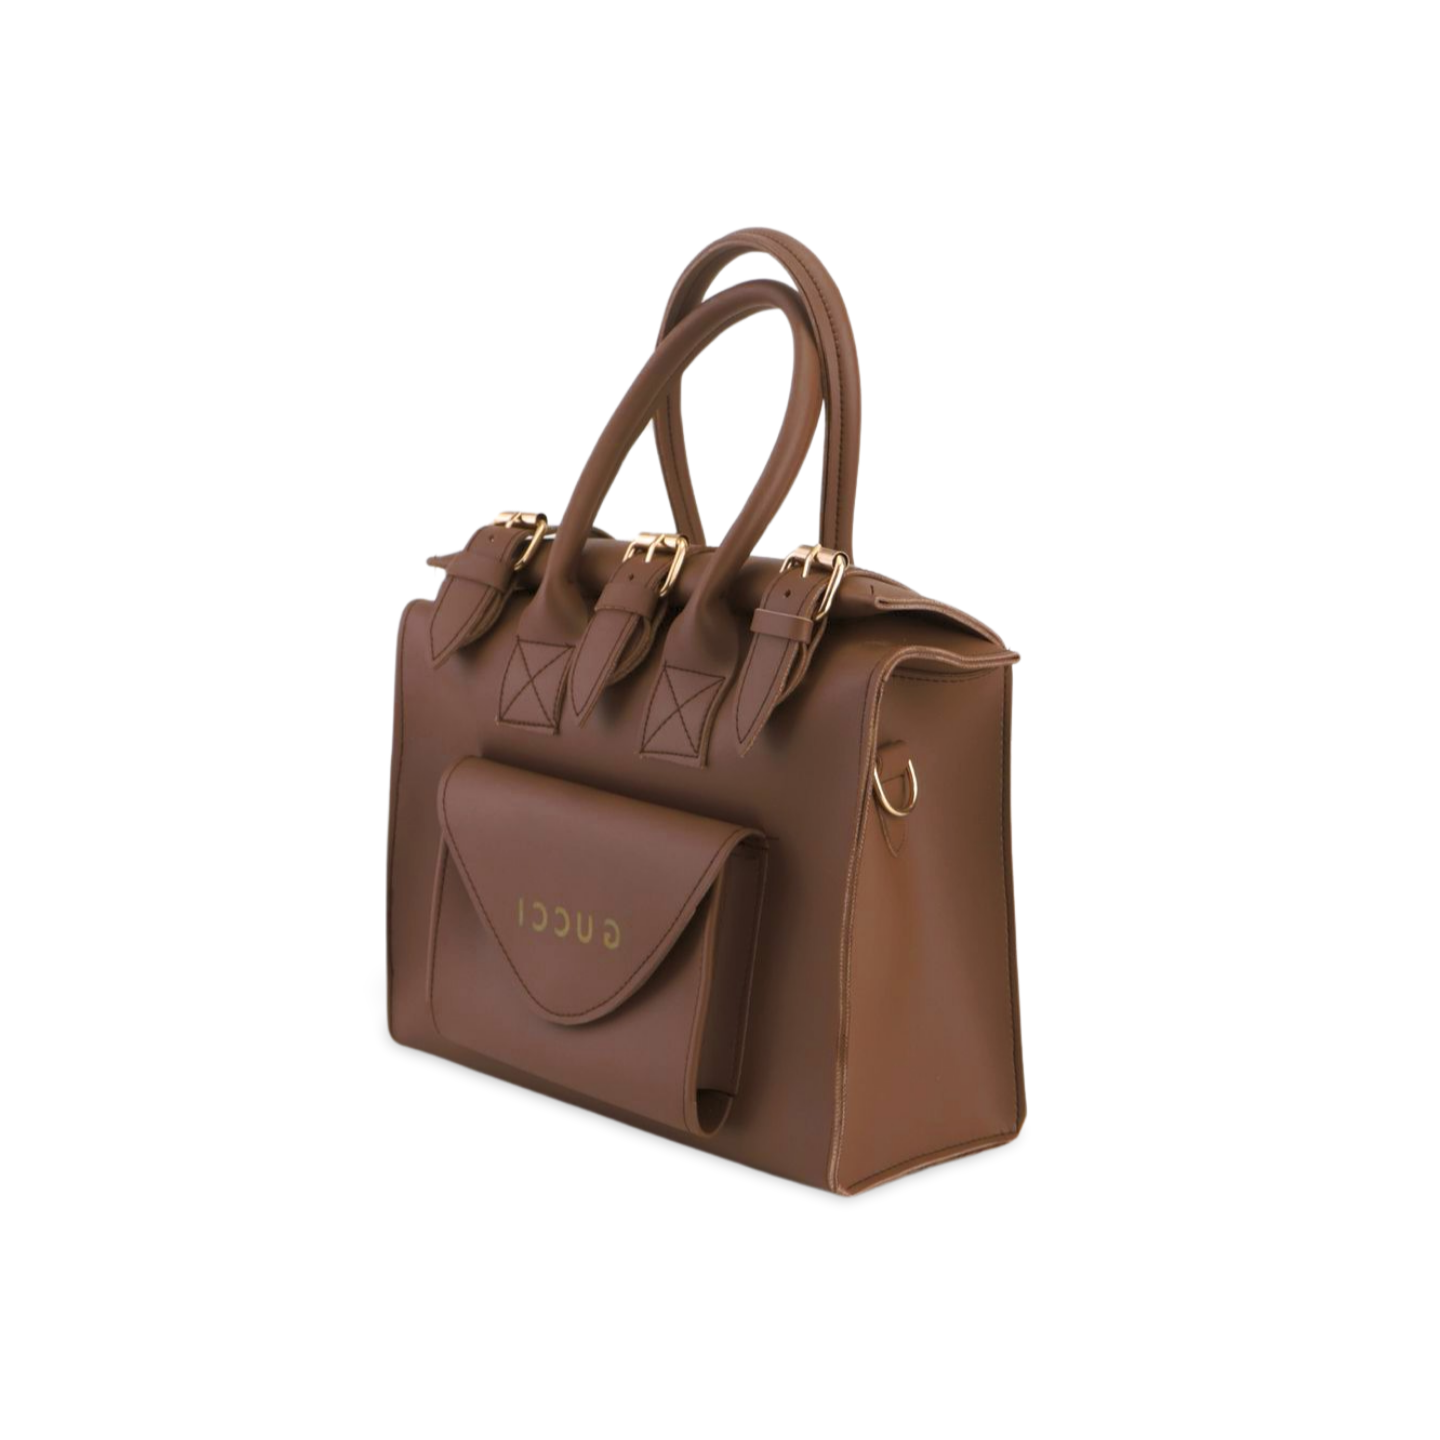 Classy PU Leather Handbag - High Quality, Stylish, and Affordable